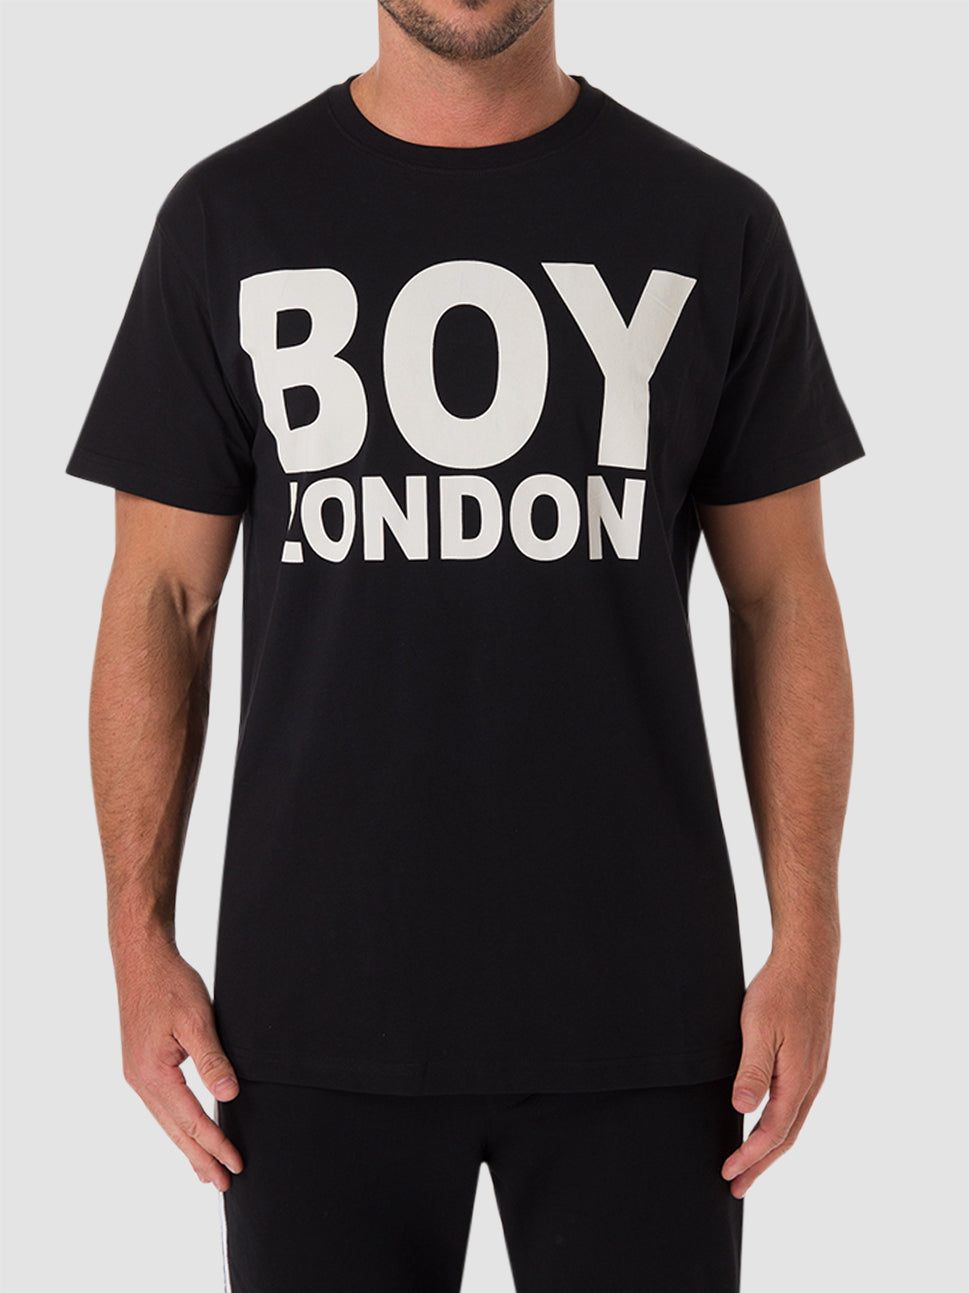 Boy London Tee BlackWhite 1015021